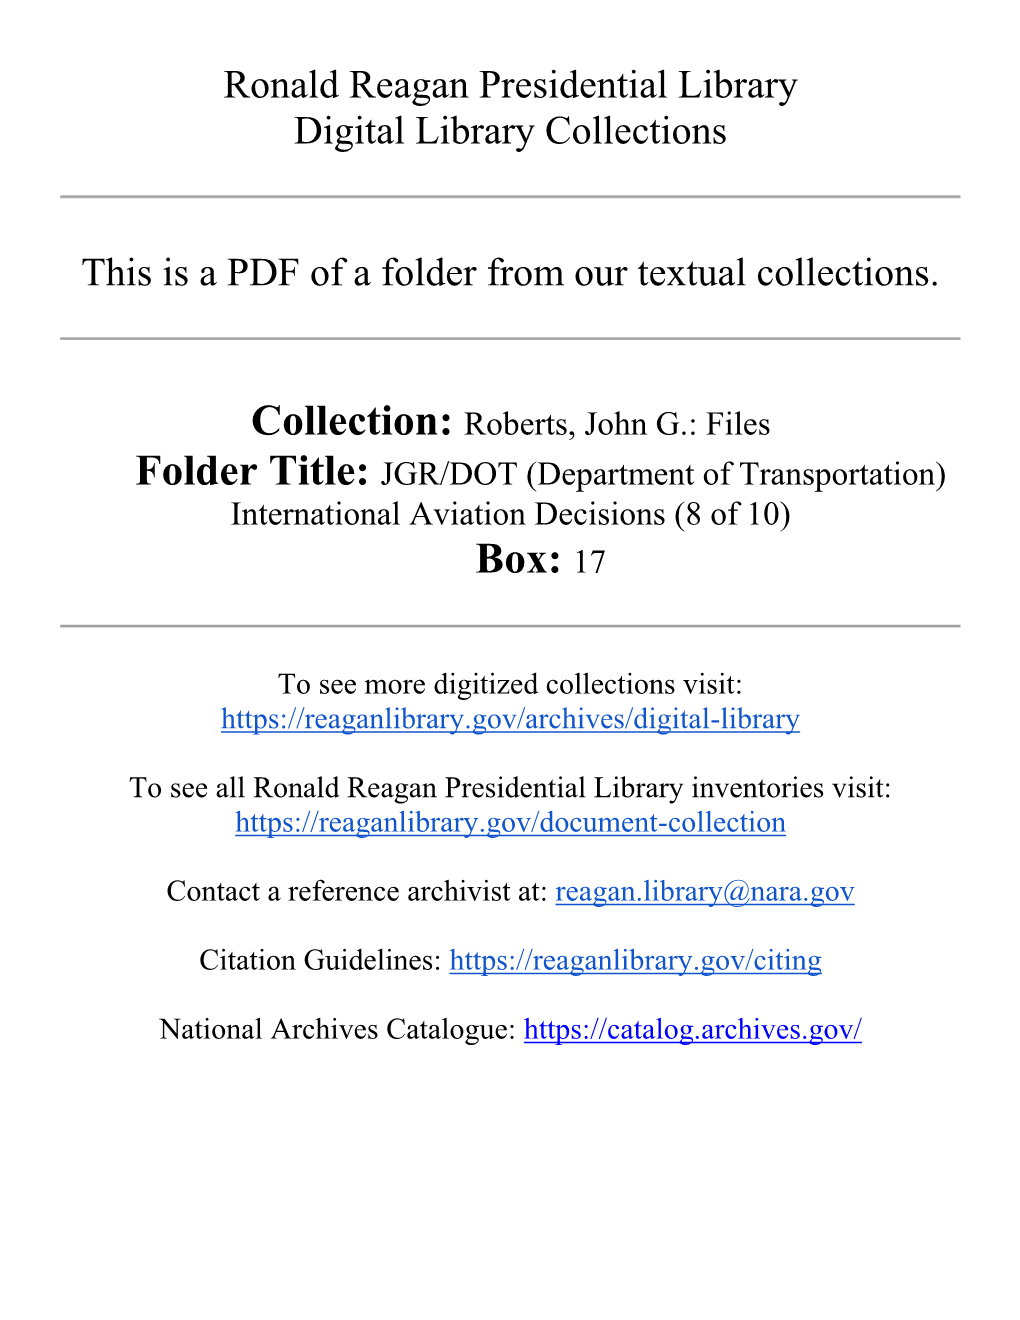 Files Folder Title: JGR/DOT (Department of Transportation) International Aviation Decisions (8 of 10) Box: 17